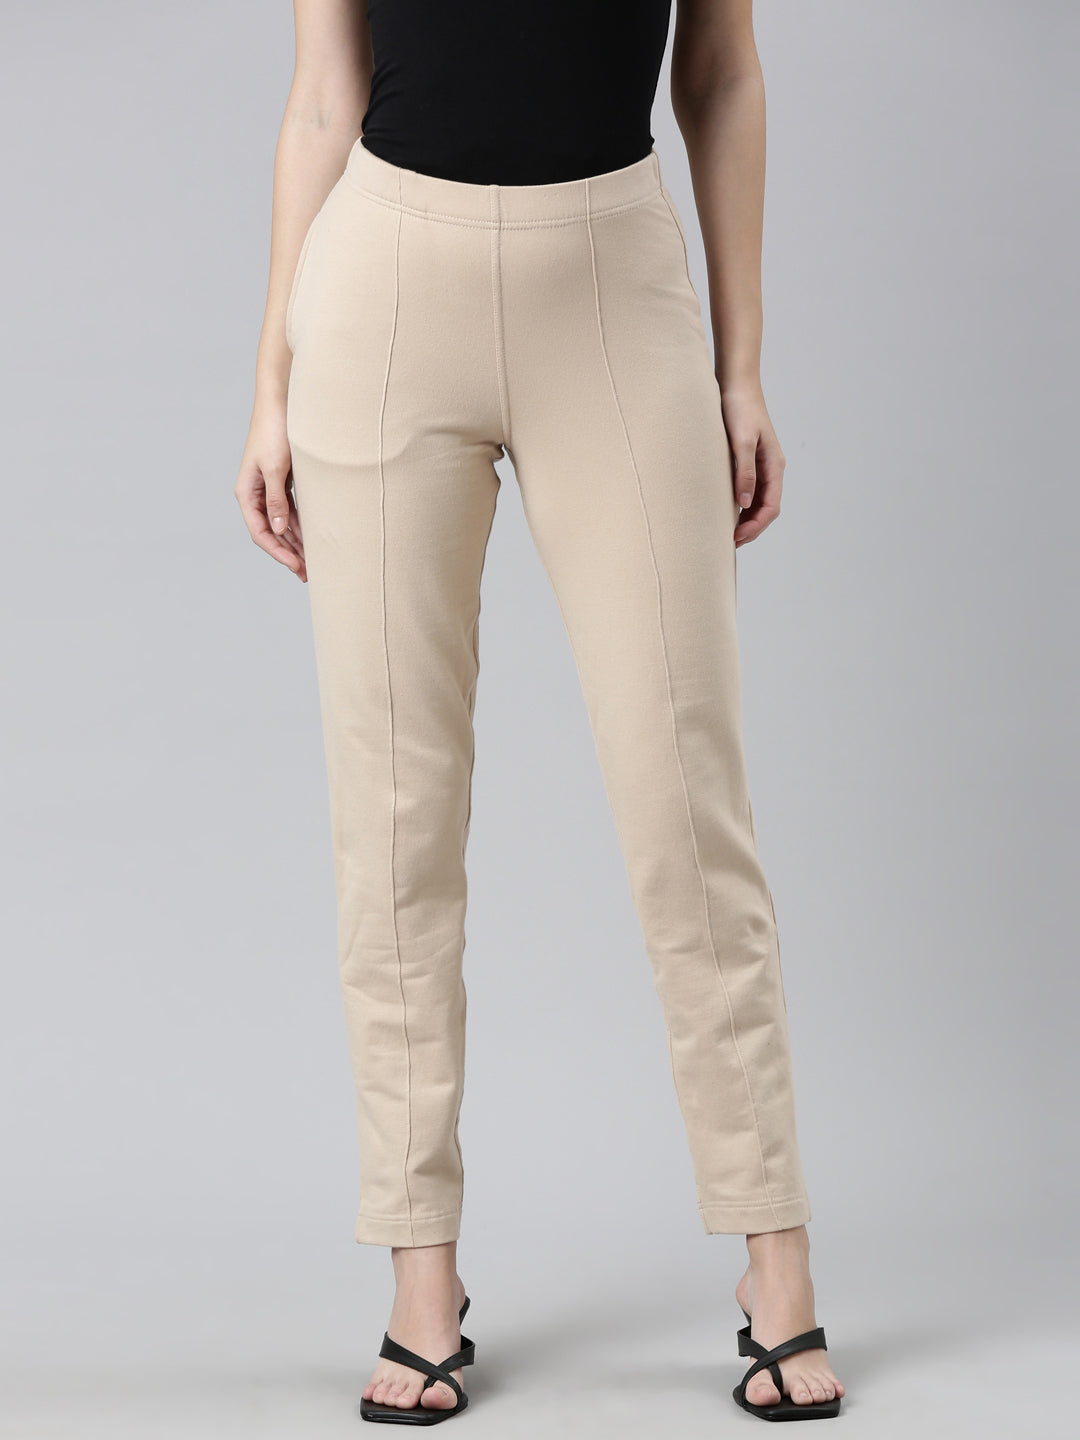 Buy Beige Pants for Women by Go Colors Online